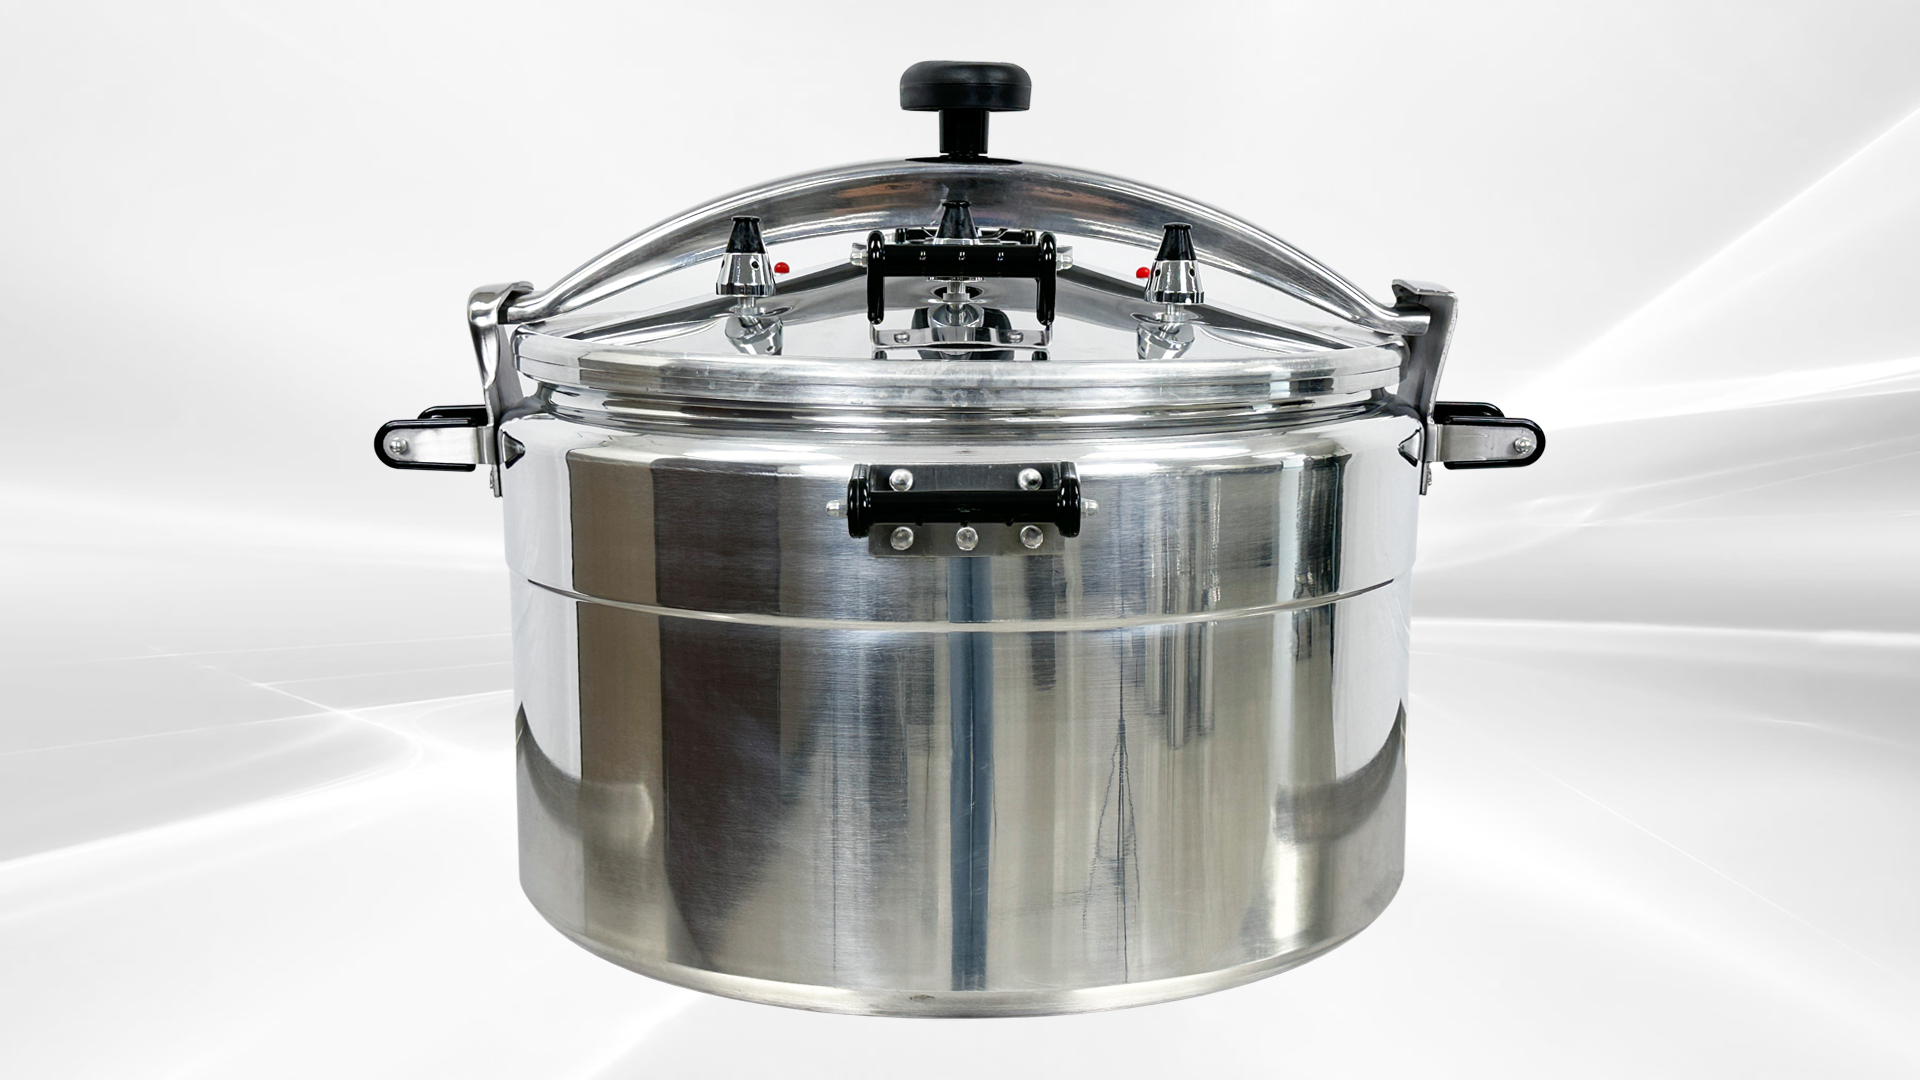 Industrial pressure cooker